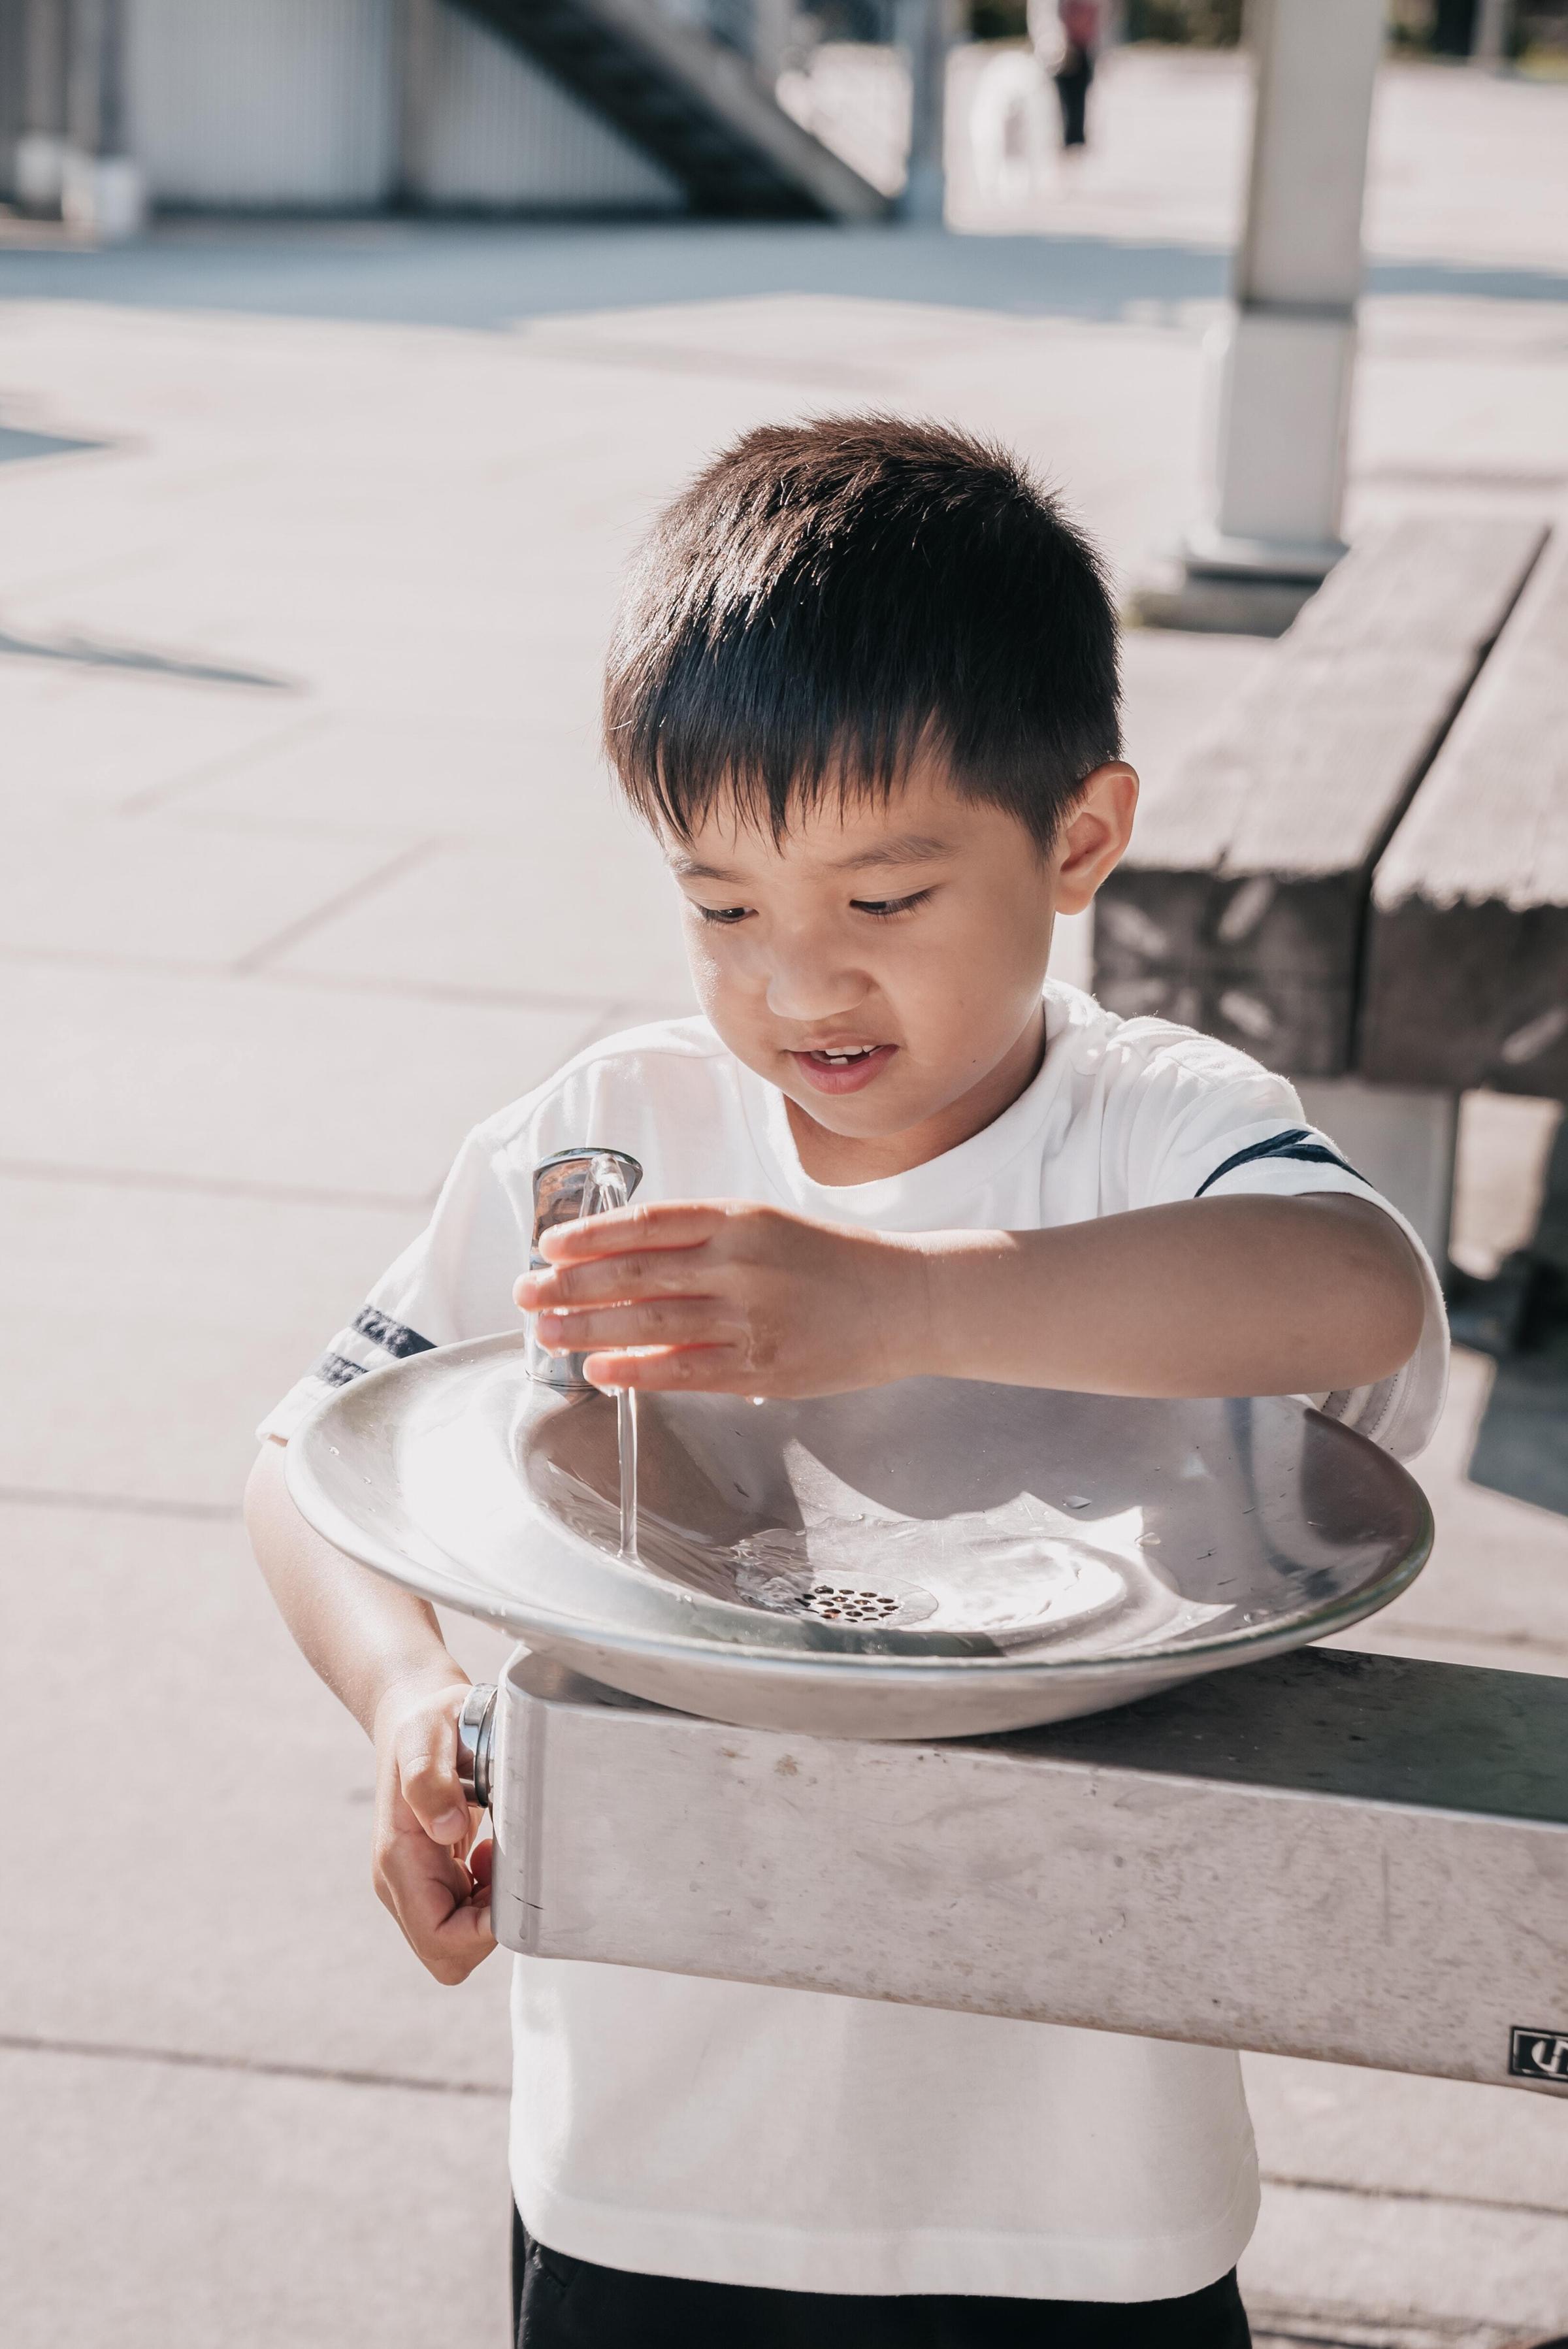 Childhood Lead Exposure Through School Drinking Water